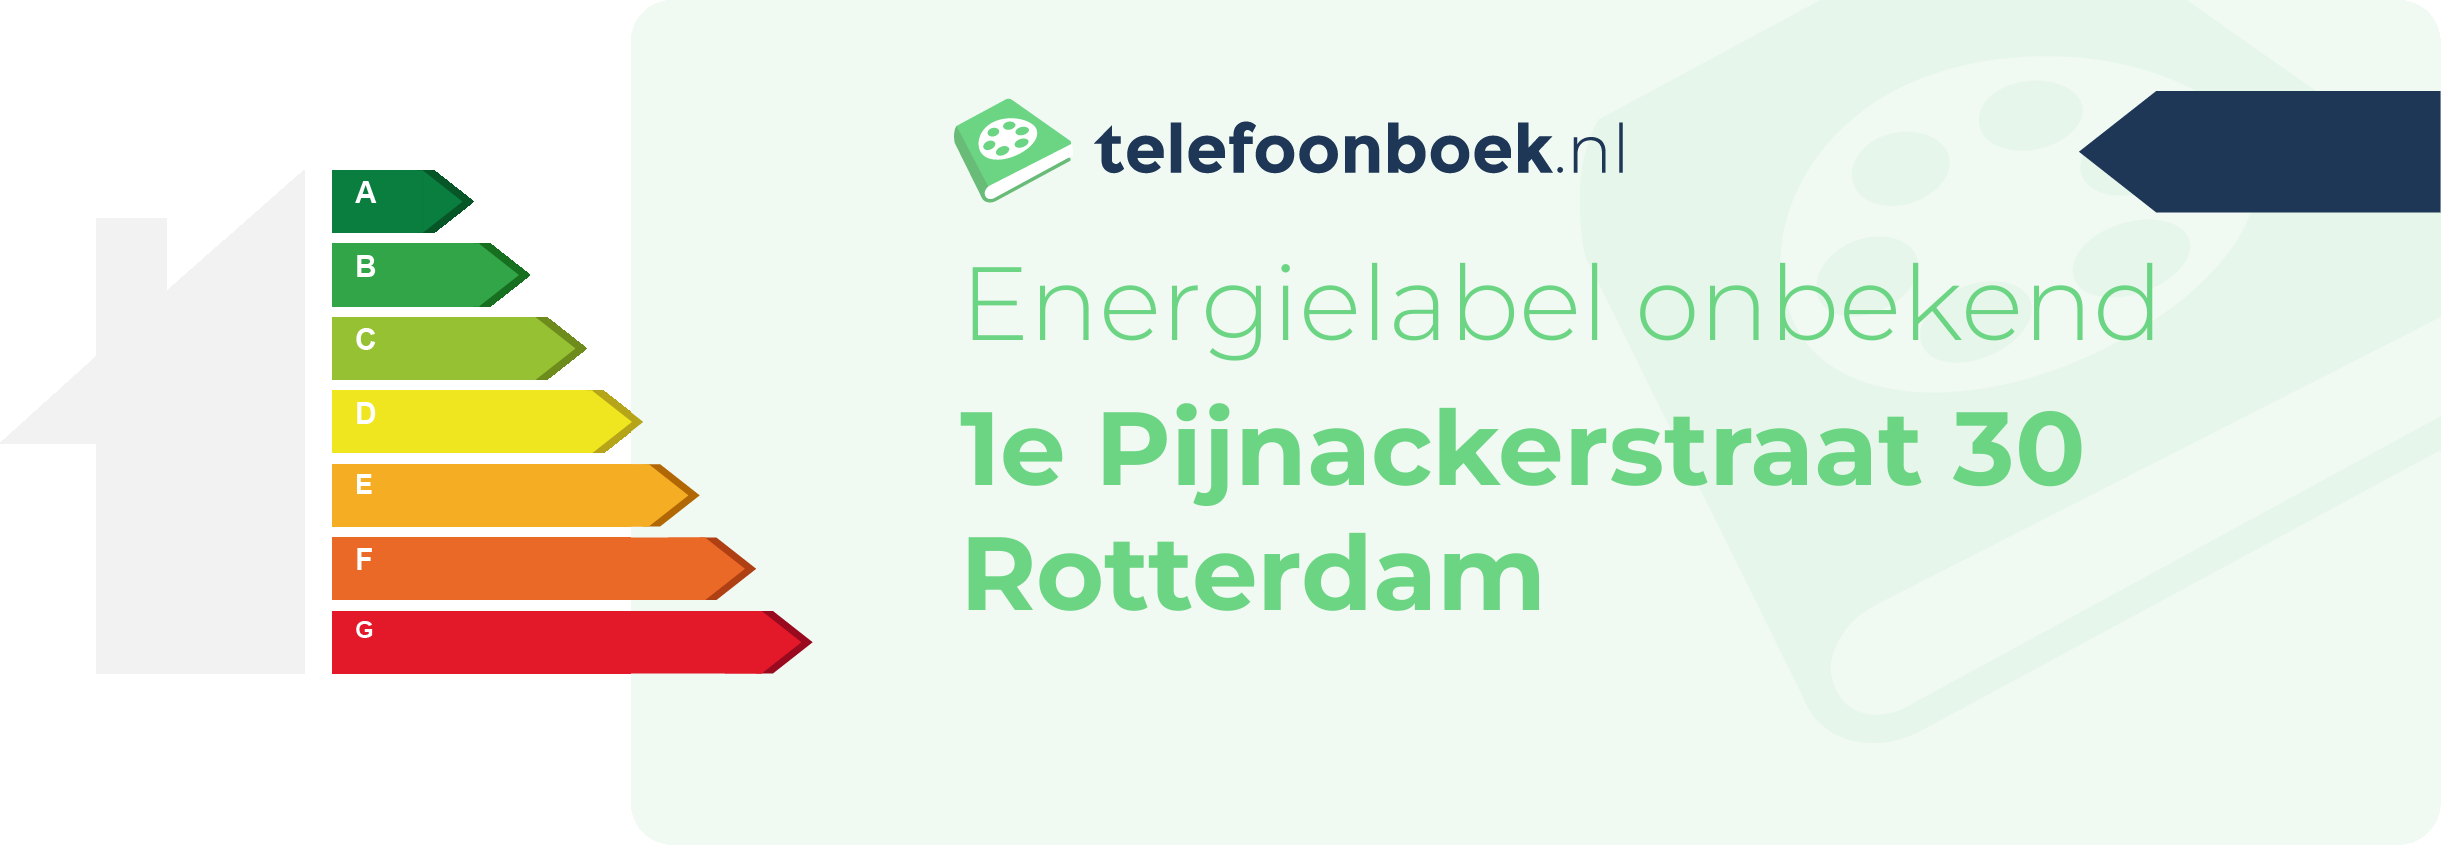 Energielabel 1e Pijnackerstraat 30 Rotterdam